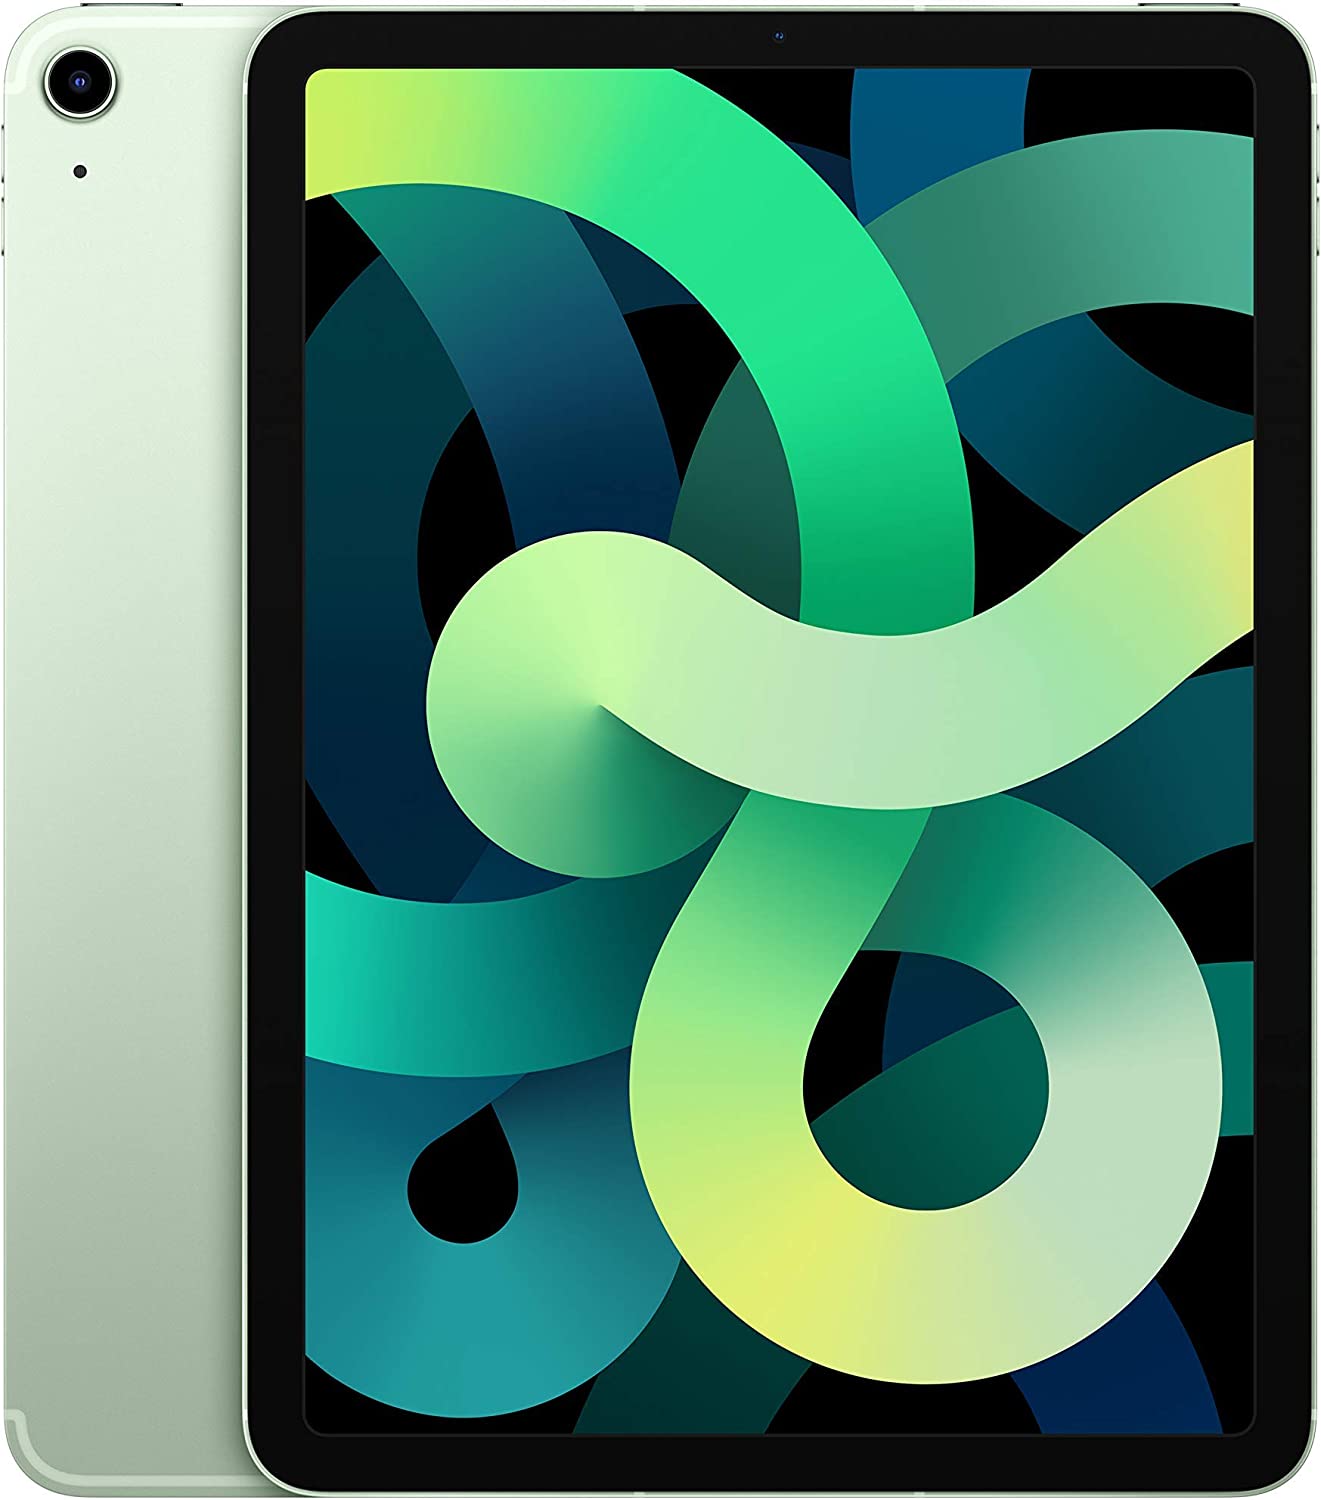 Apple iPad Air 4th Gen 256GB Wifi + Cellular (Unlocked) - Green (Refurbished)